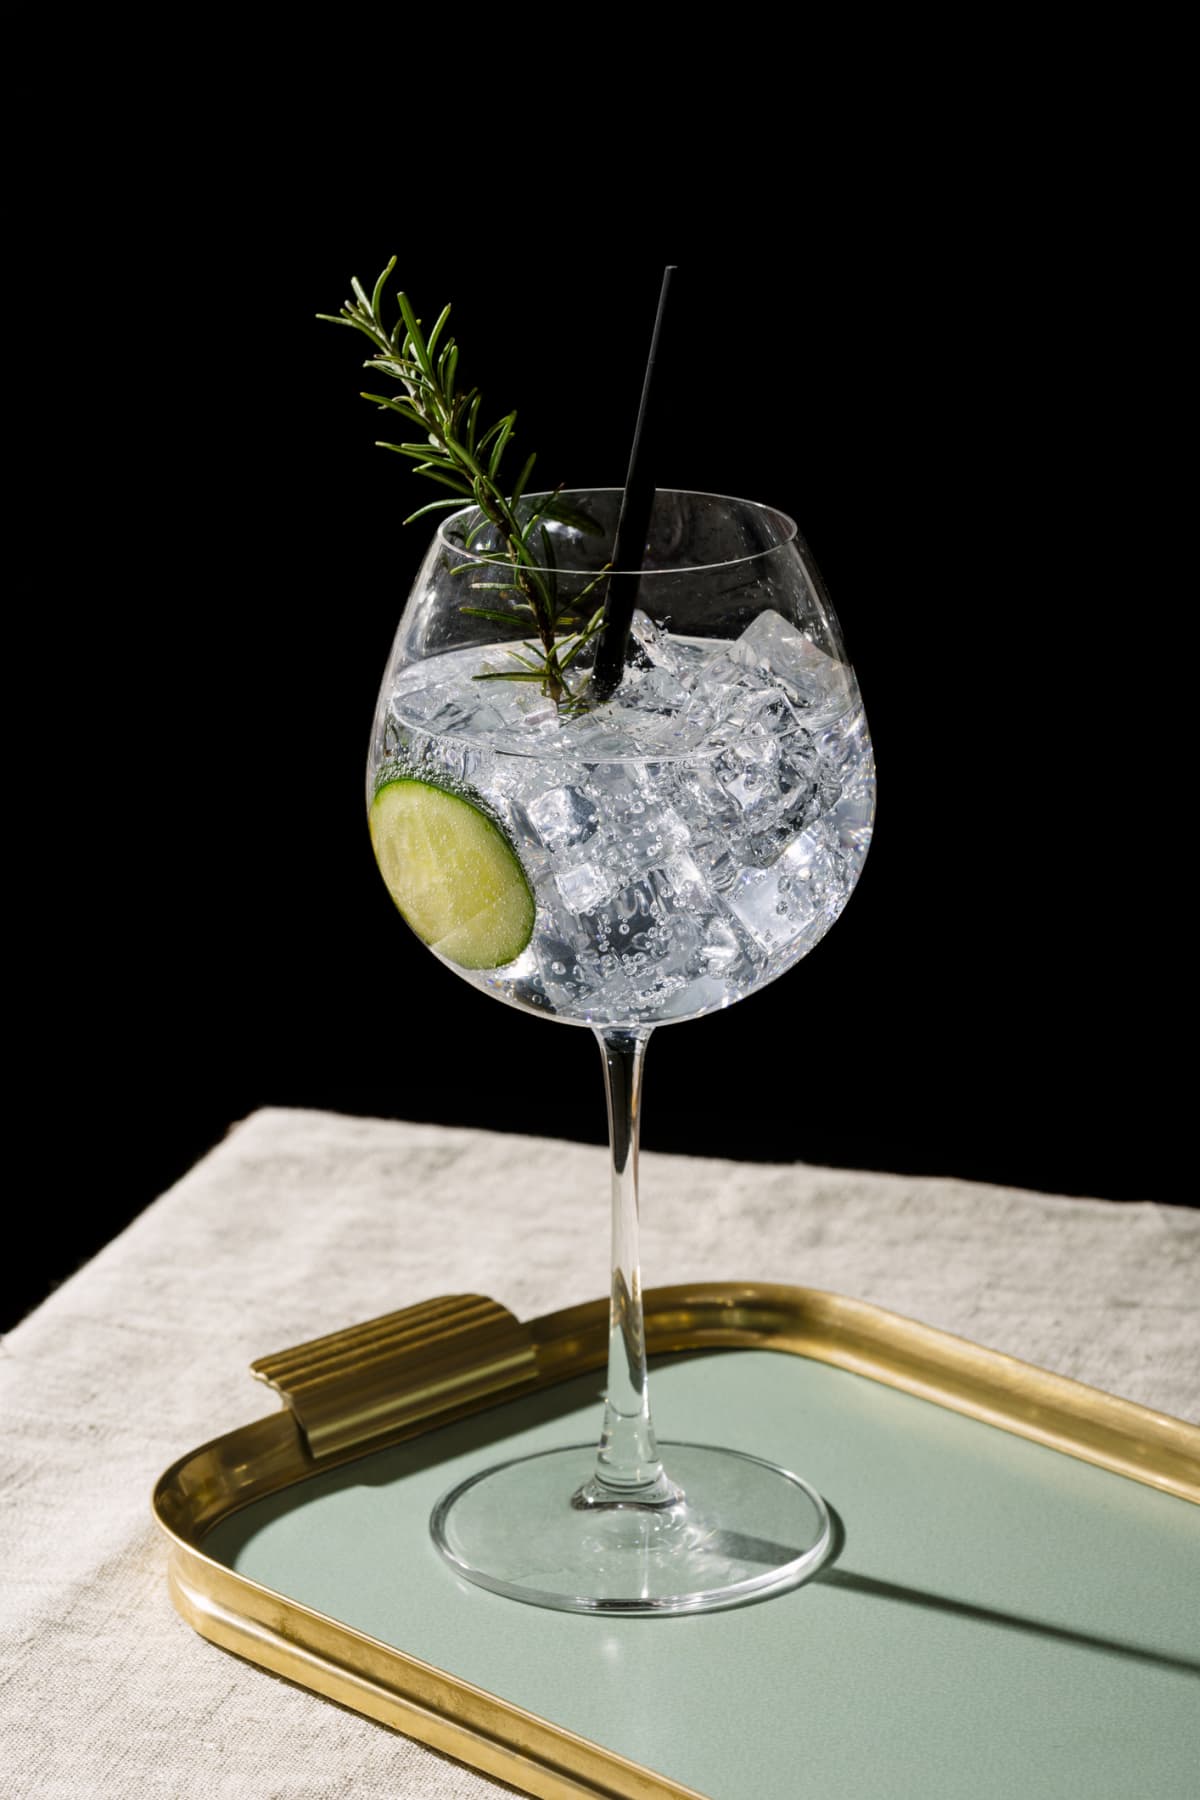 Gin tonic, an international cocktail